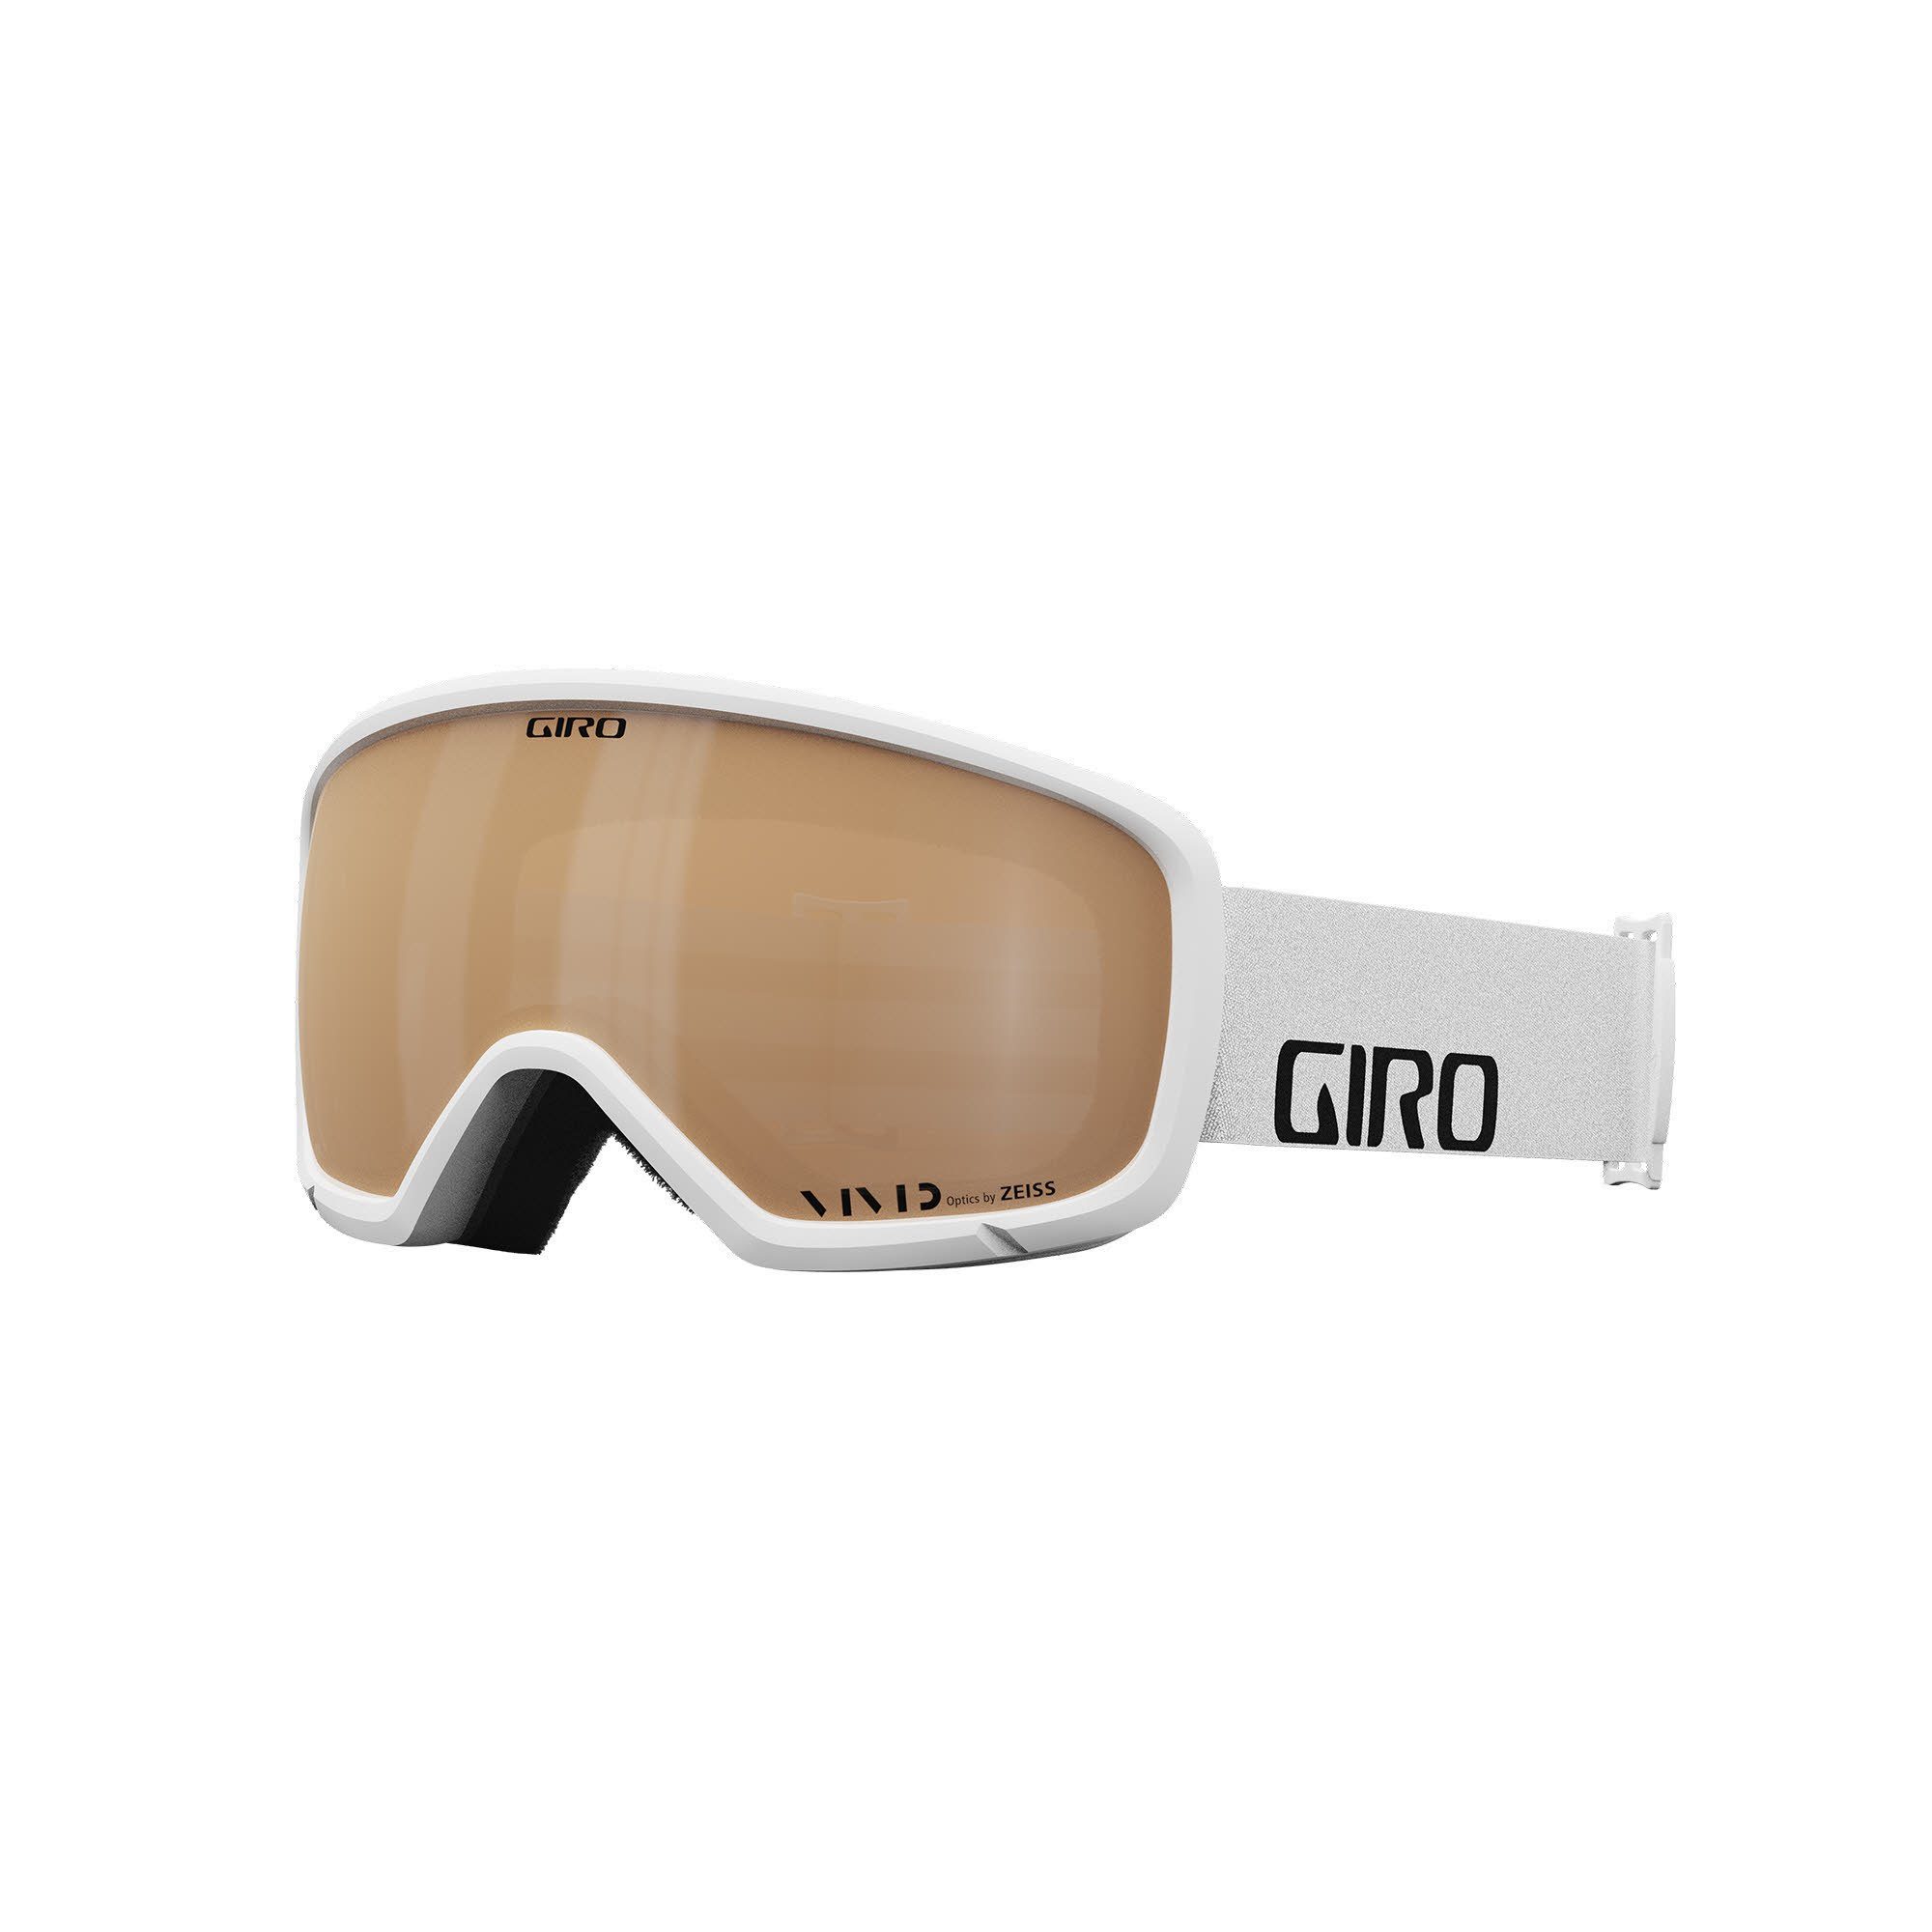 Skibrille (10) Giro weiss